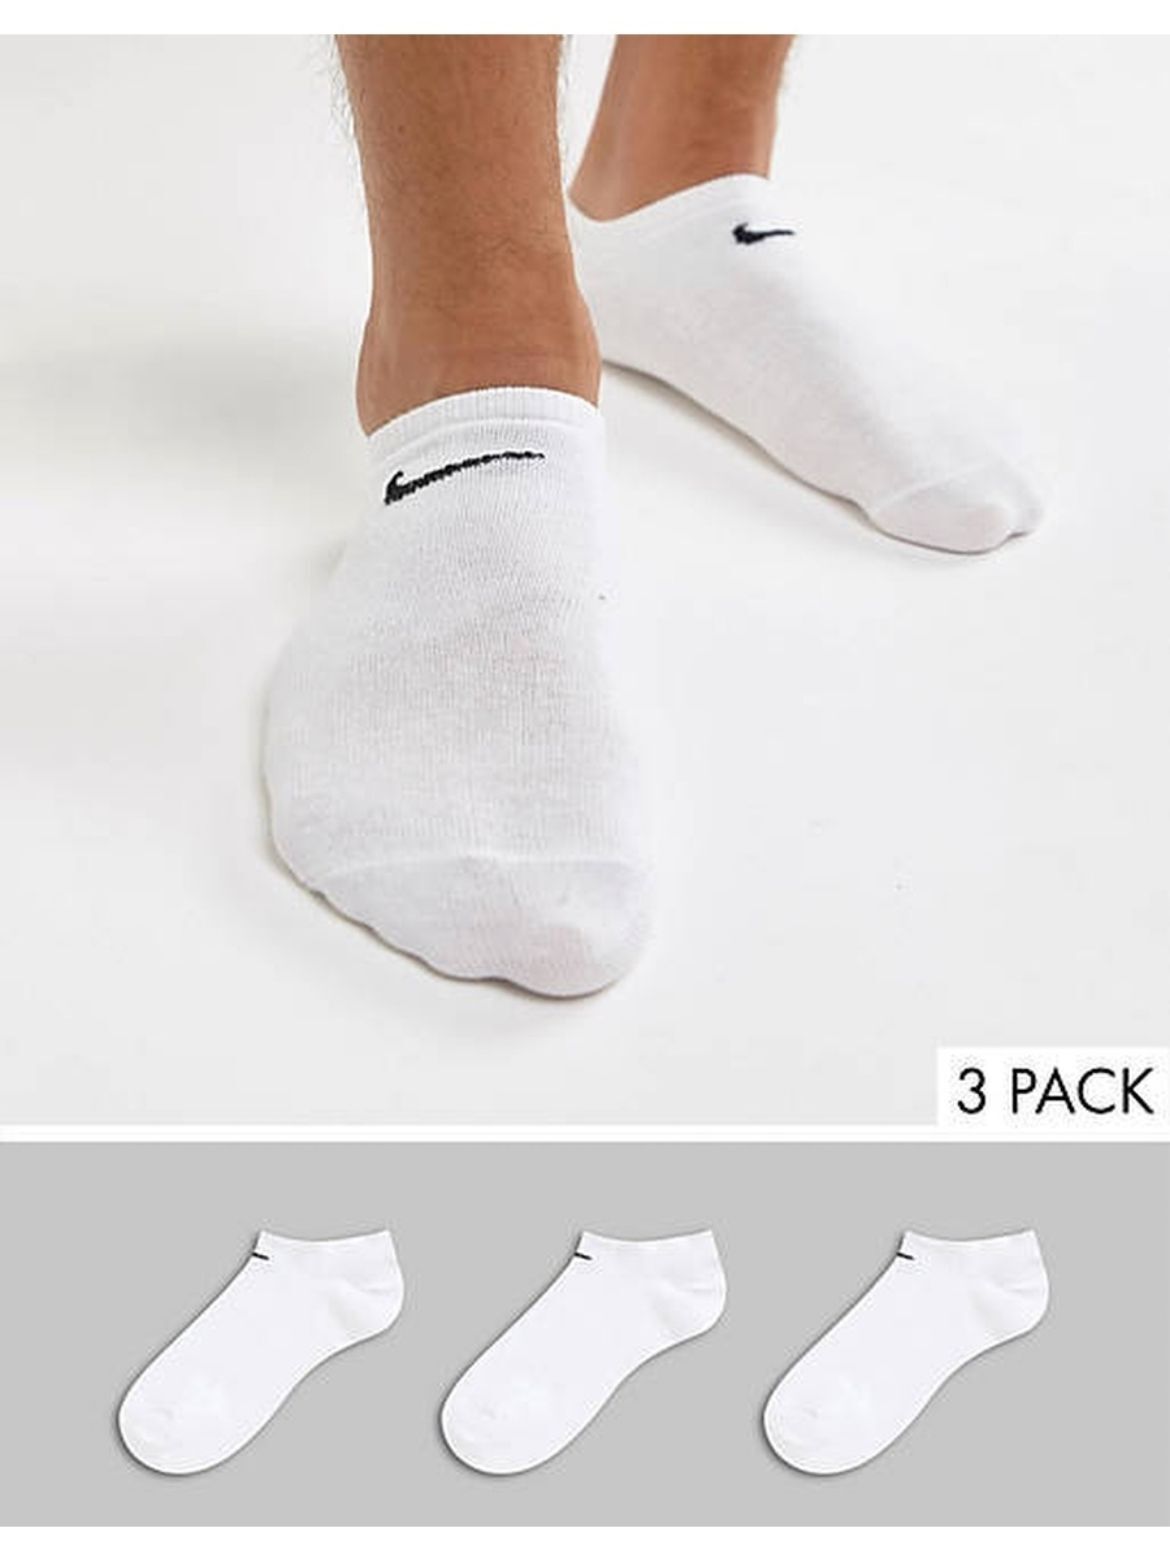 Носки найк короткие. Sx2554-101 Nike. Носки короткие найк sx2554. Носки найк комплект белые. Носки спортивные короткие мужские найк.